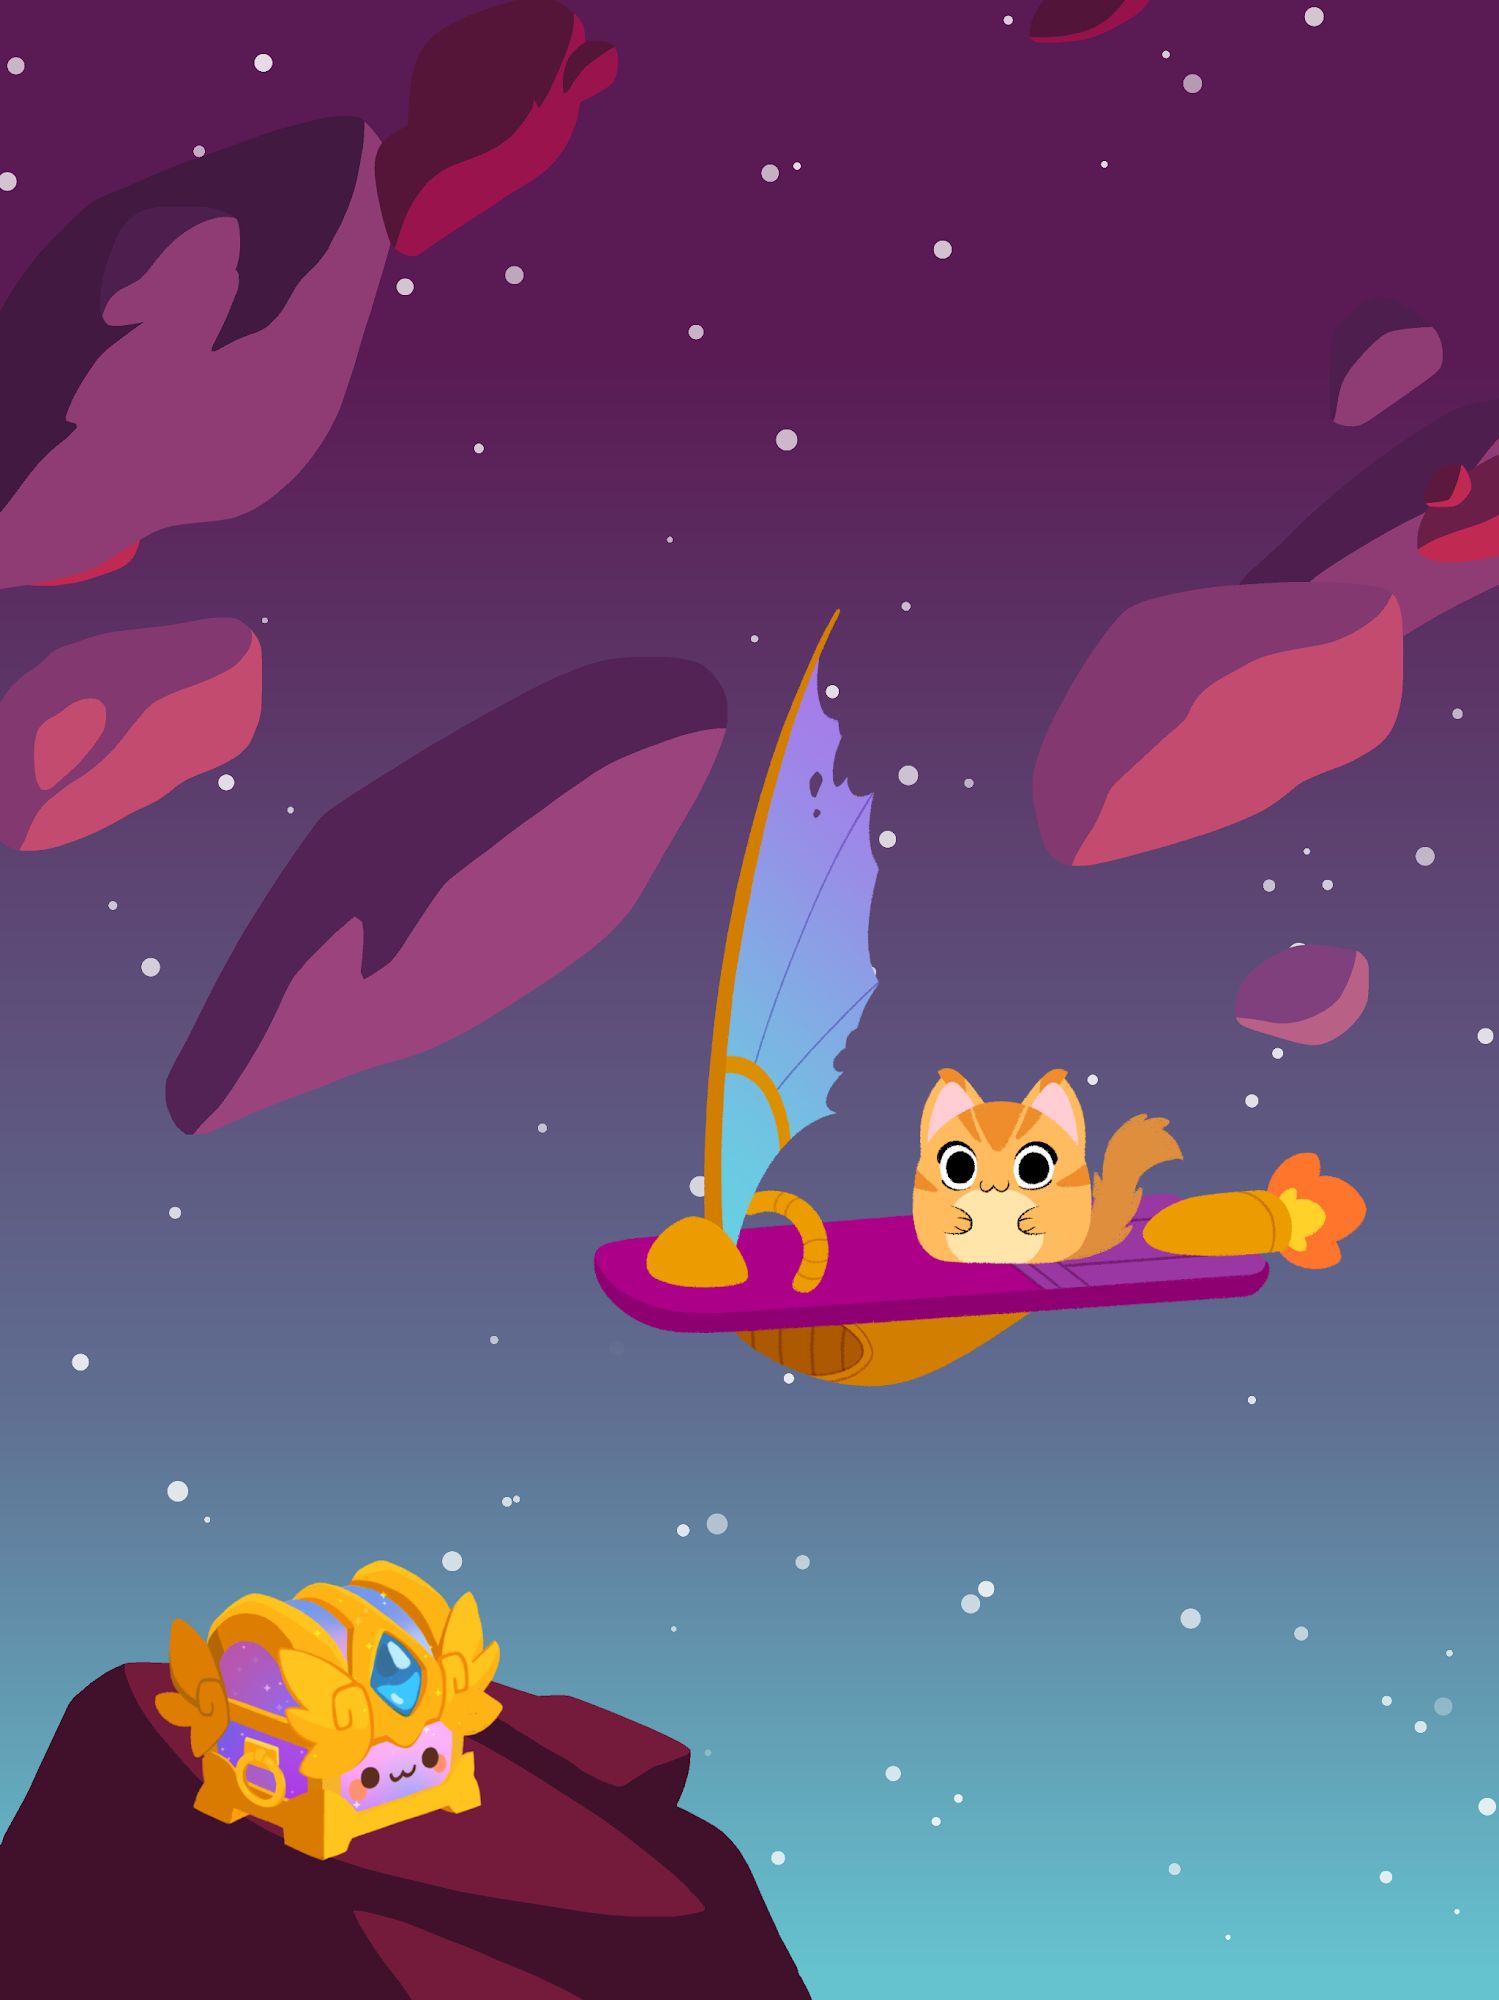 Descargar Sailor Cats 2: Space Odyssey gratis para Android A.n.d.r.o.i.d. .5...0. .a.n.d. .m.o.r.e.